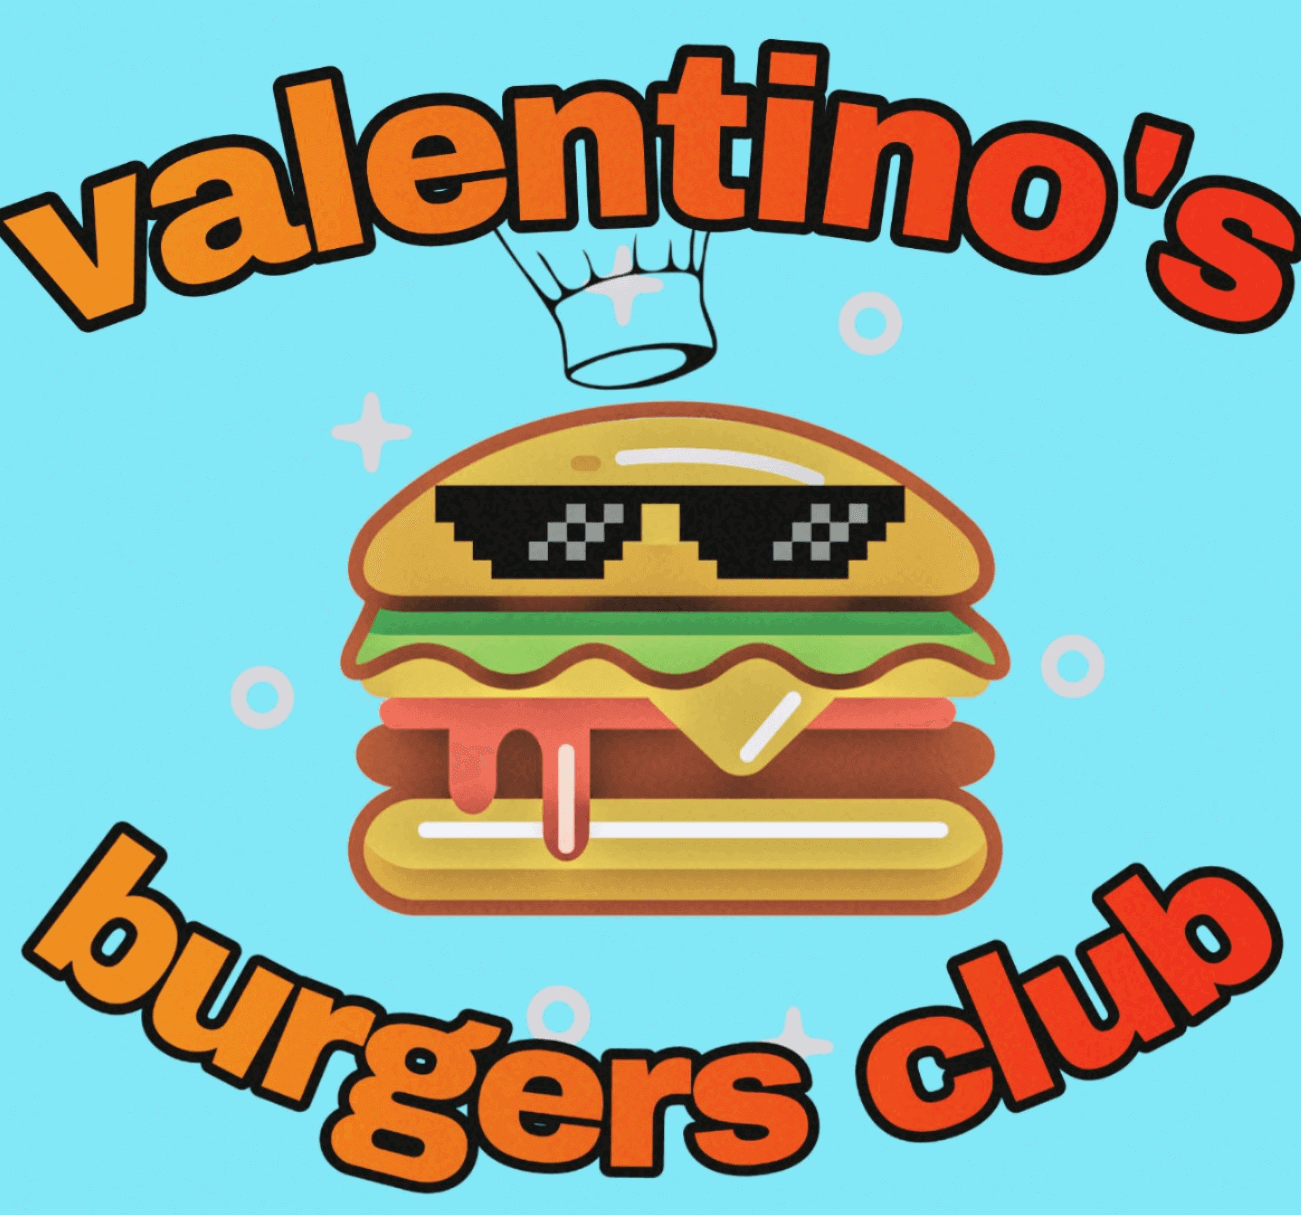 Valentino's burgers club